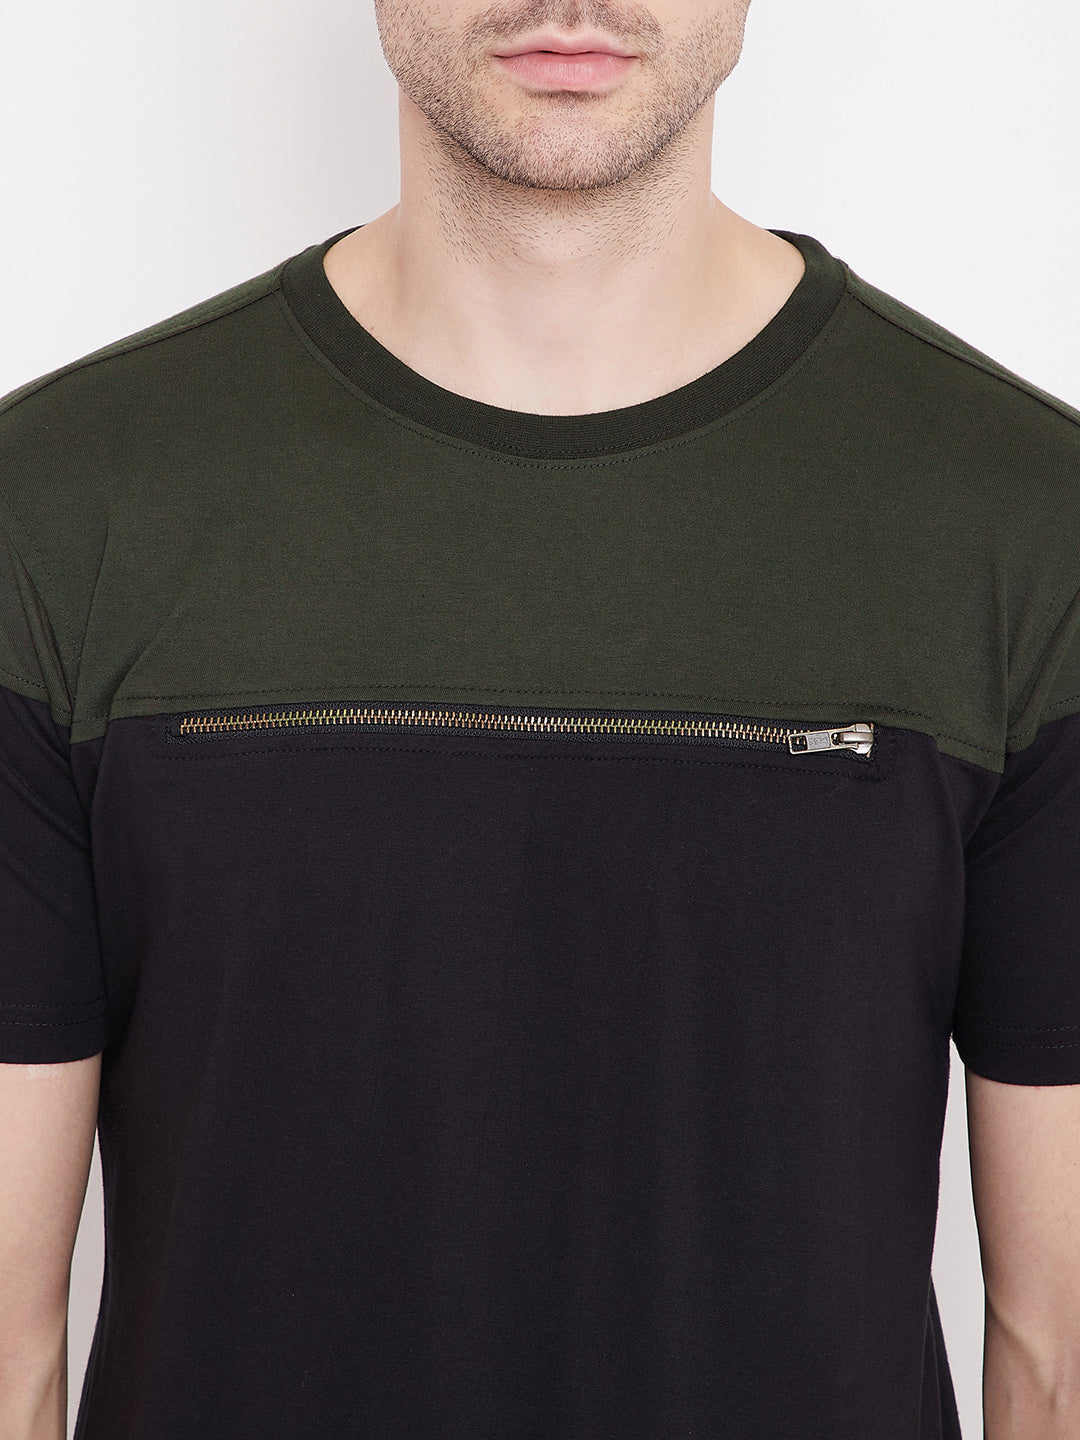 PUNK-ZIPPER Black & Olive T-Shirt